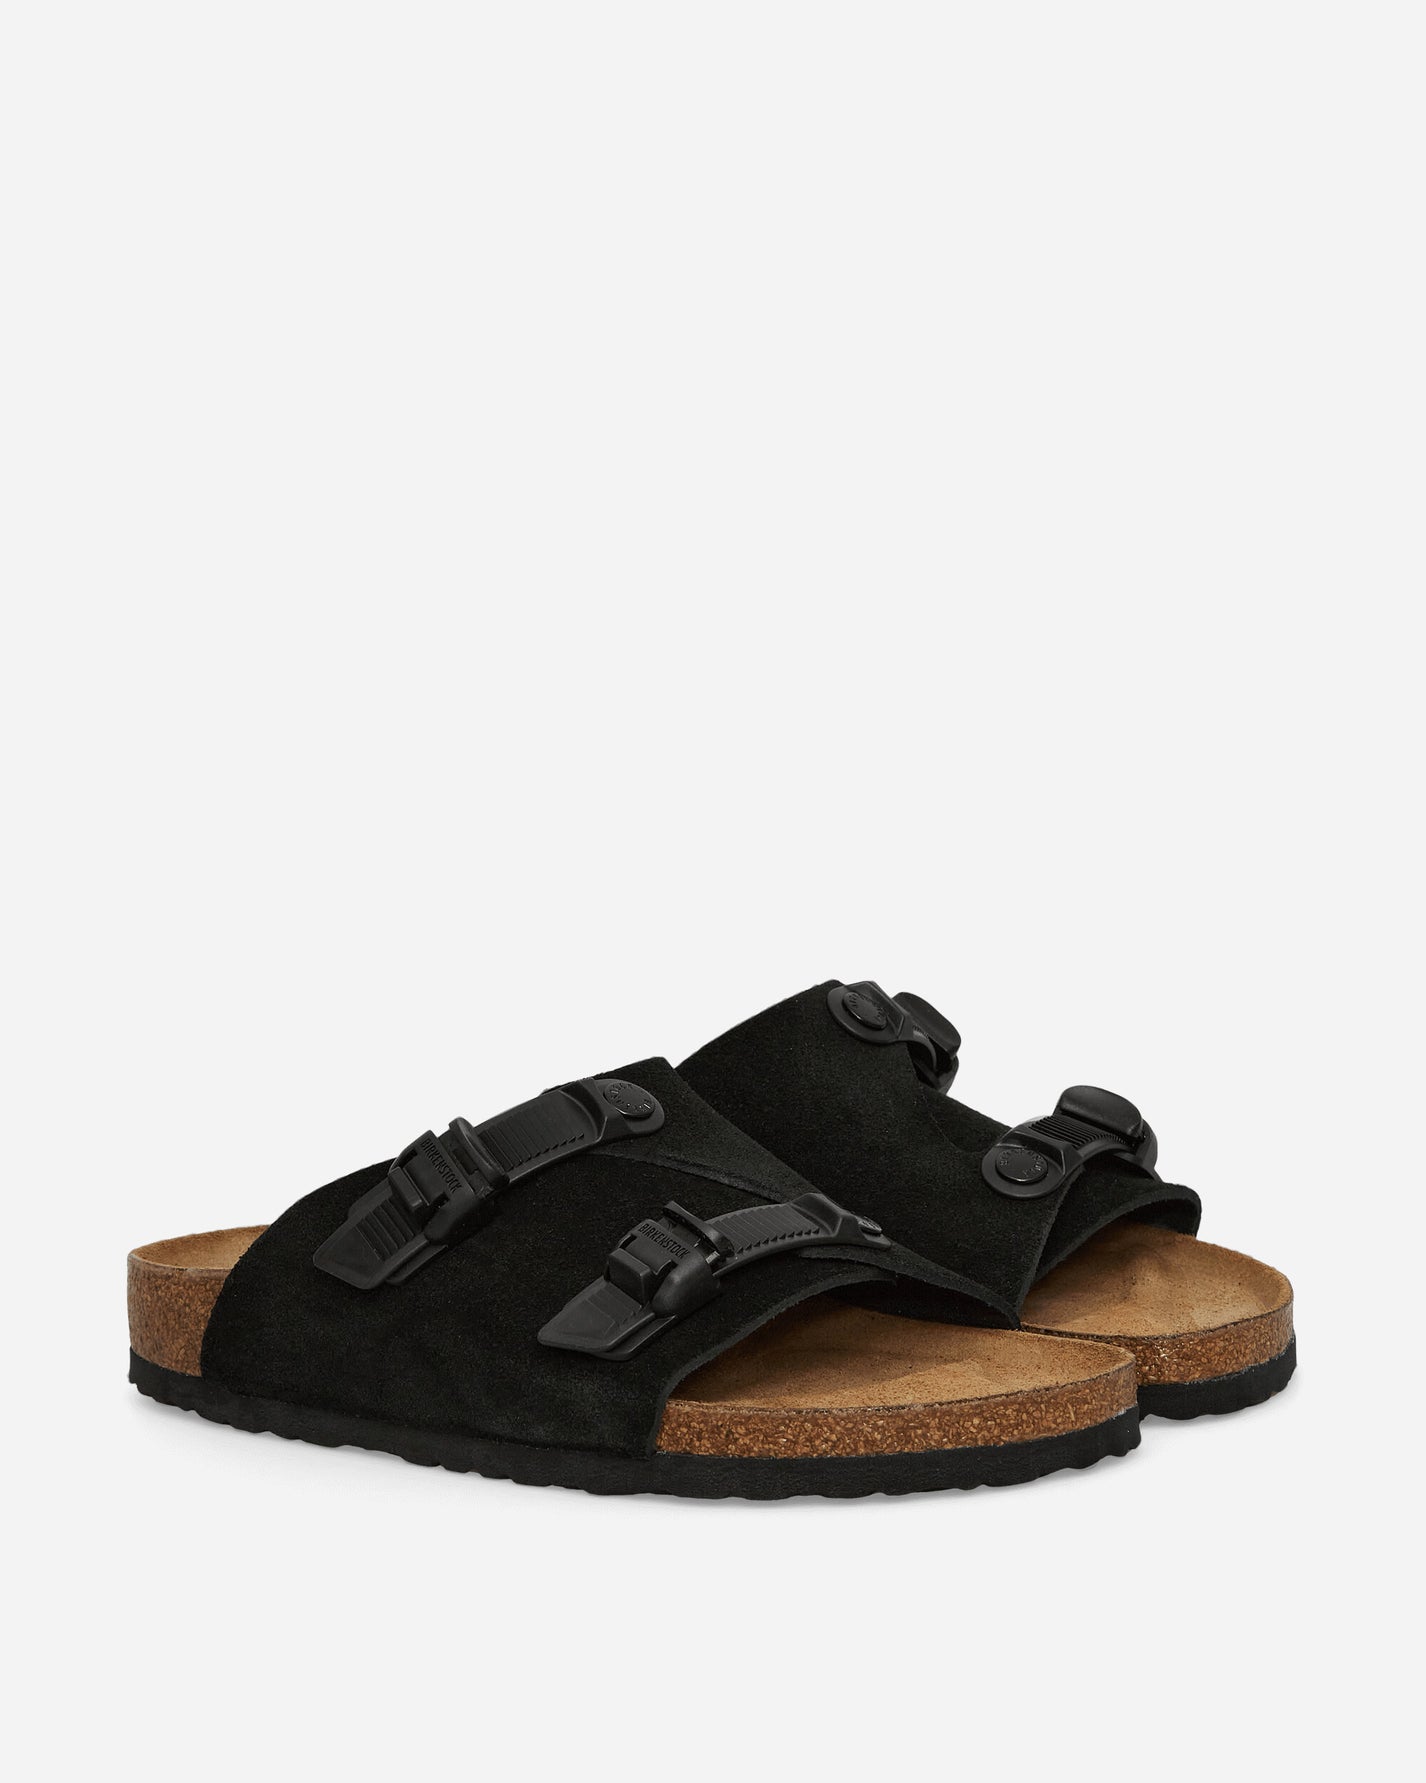 Birkenstock Zürich Tech Black Sandals and Slides Sandals and Mules 1026783